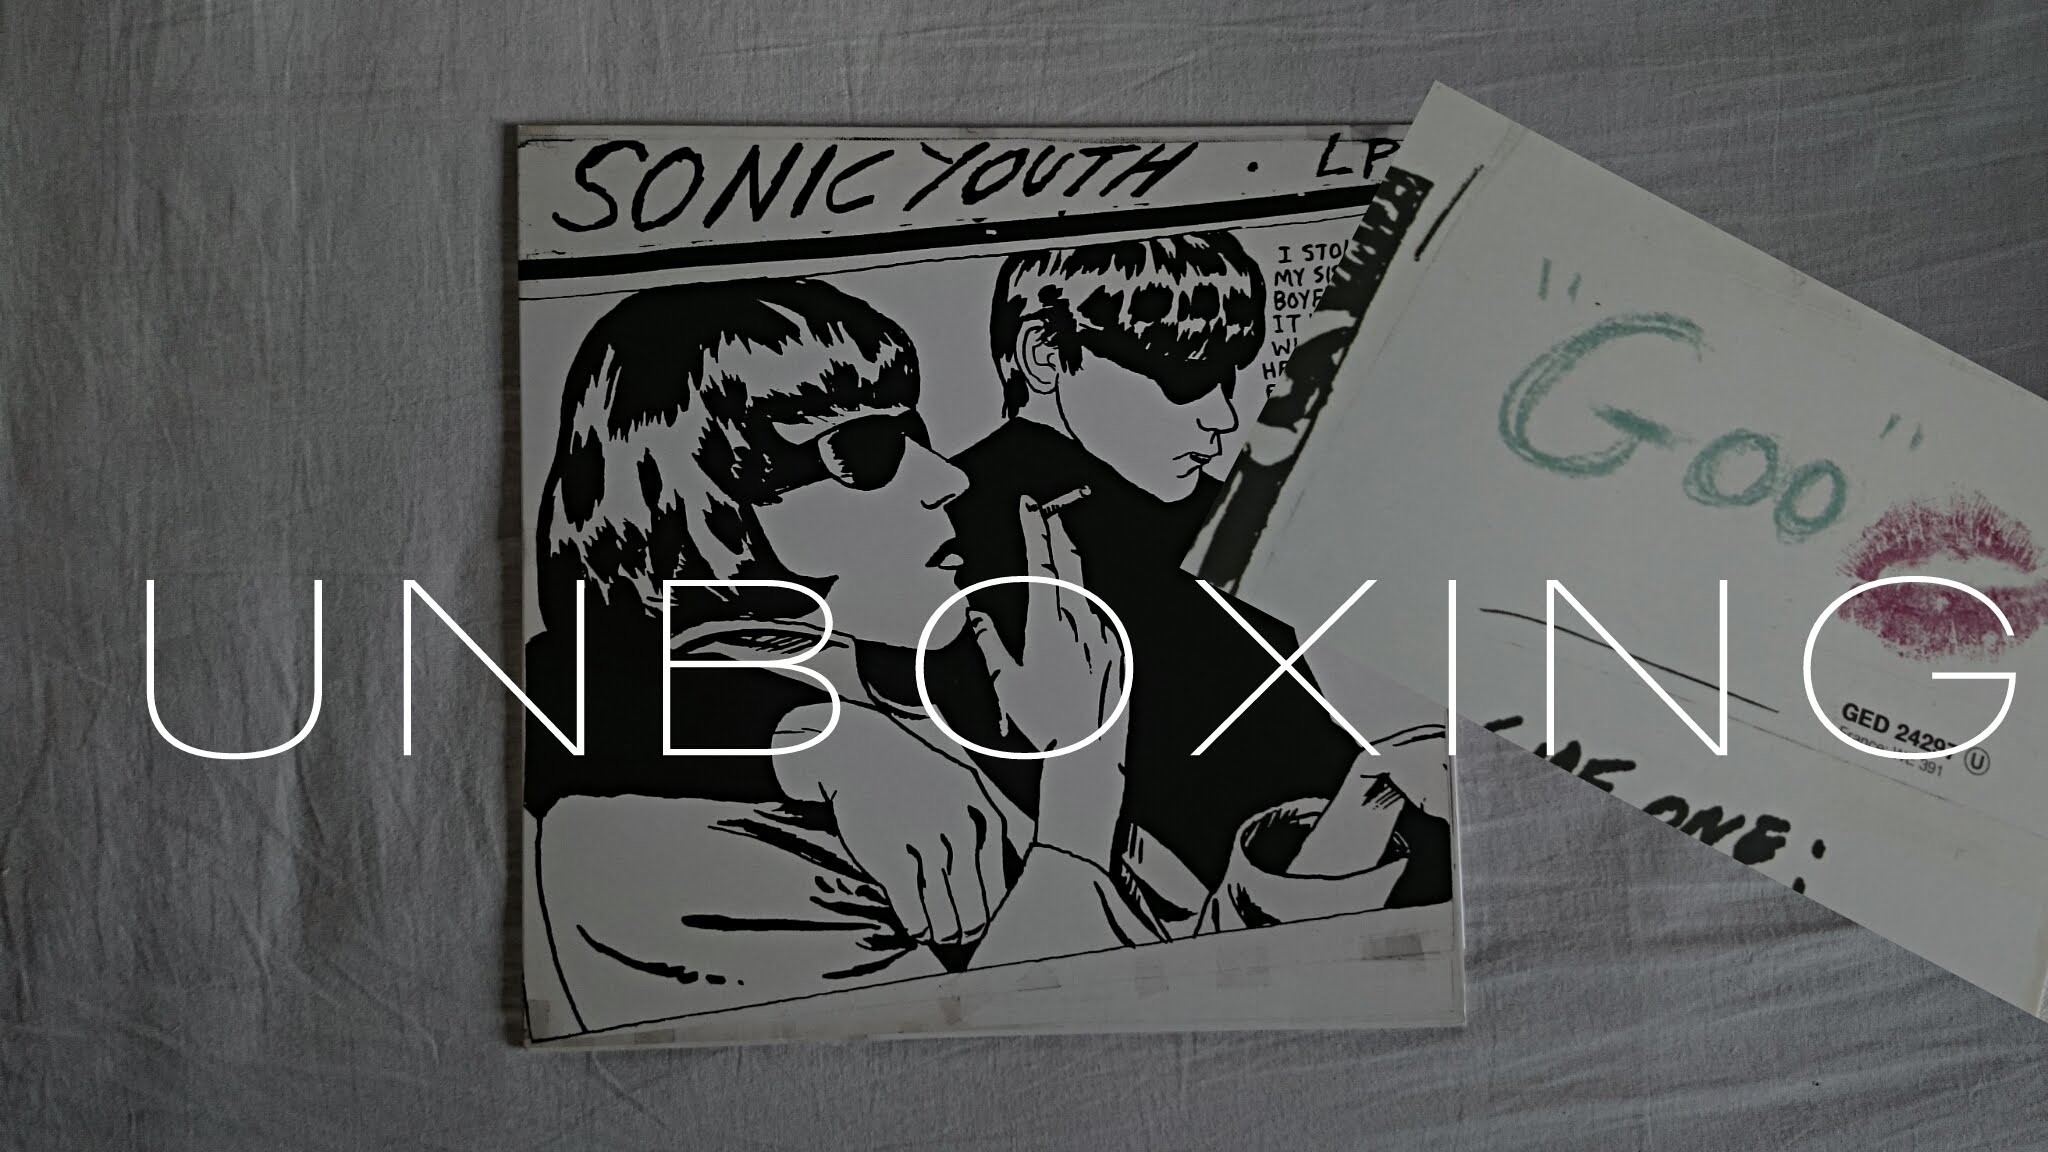 2048x1152 SONIC YOUTH "Goo" LP | UNBOXING